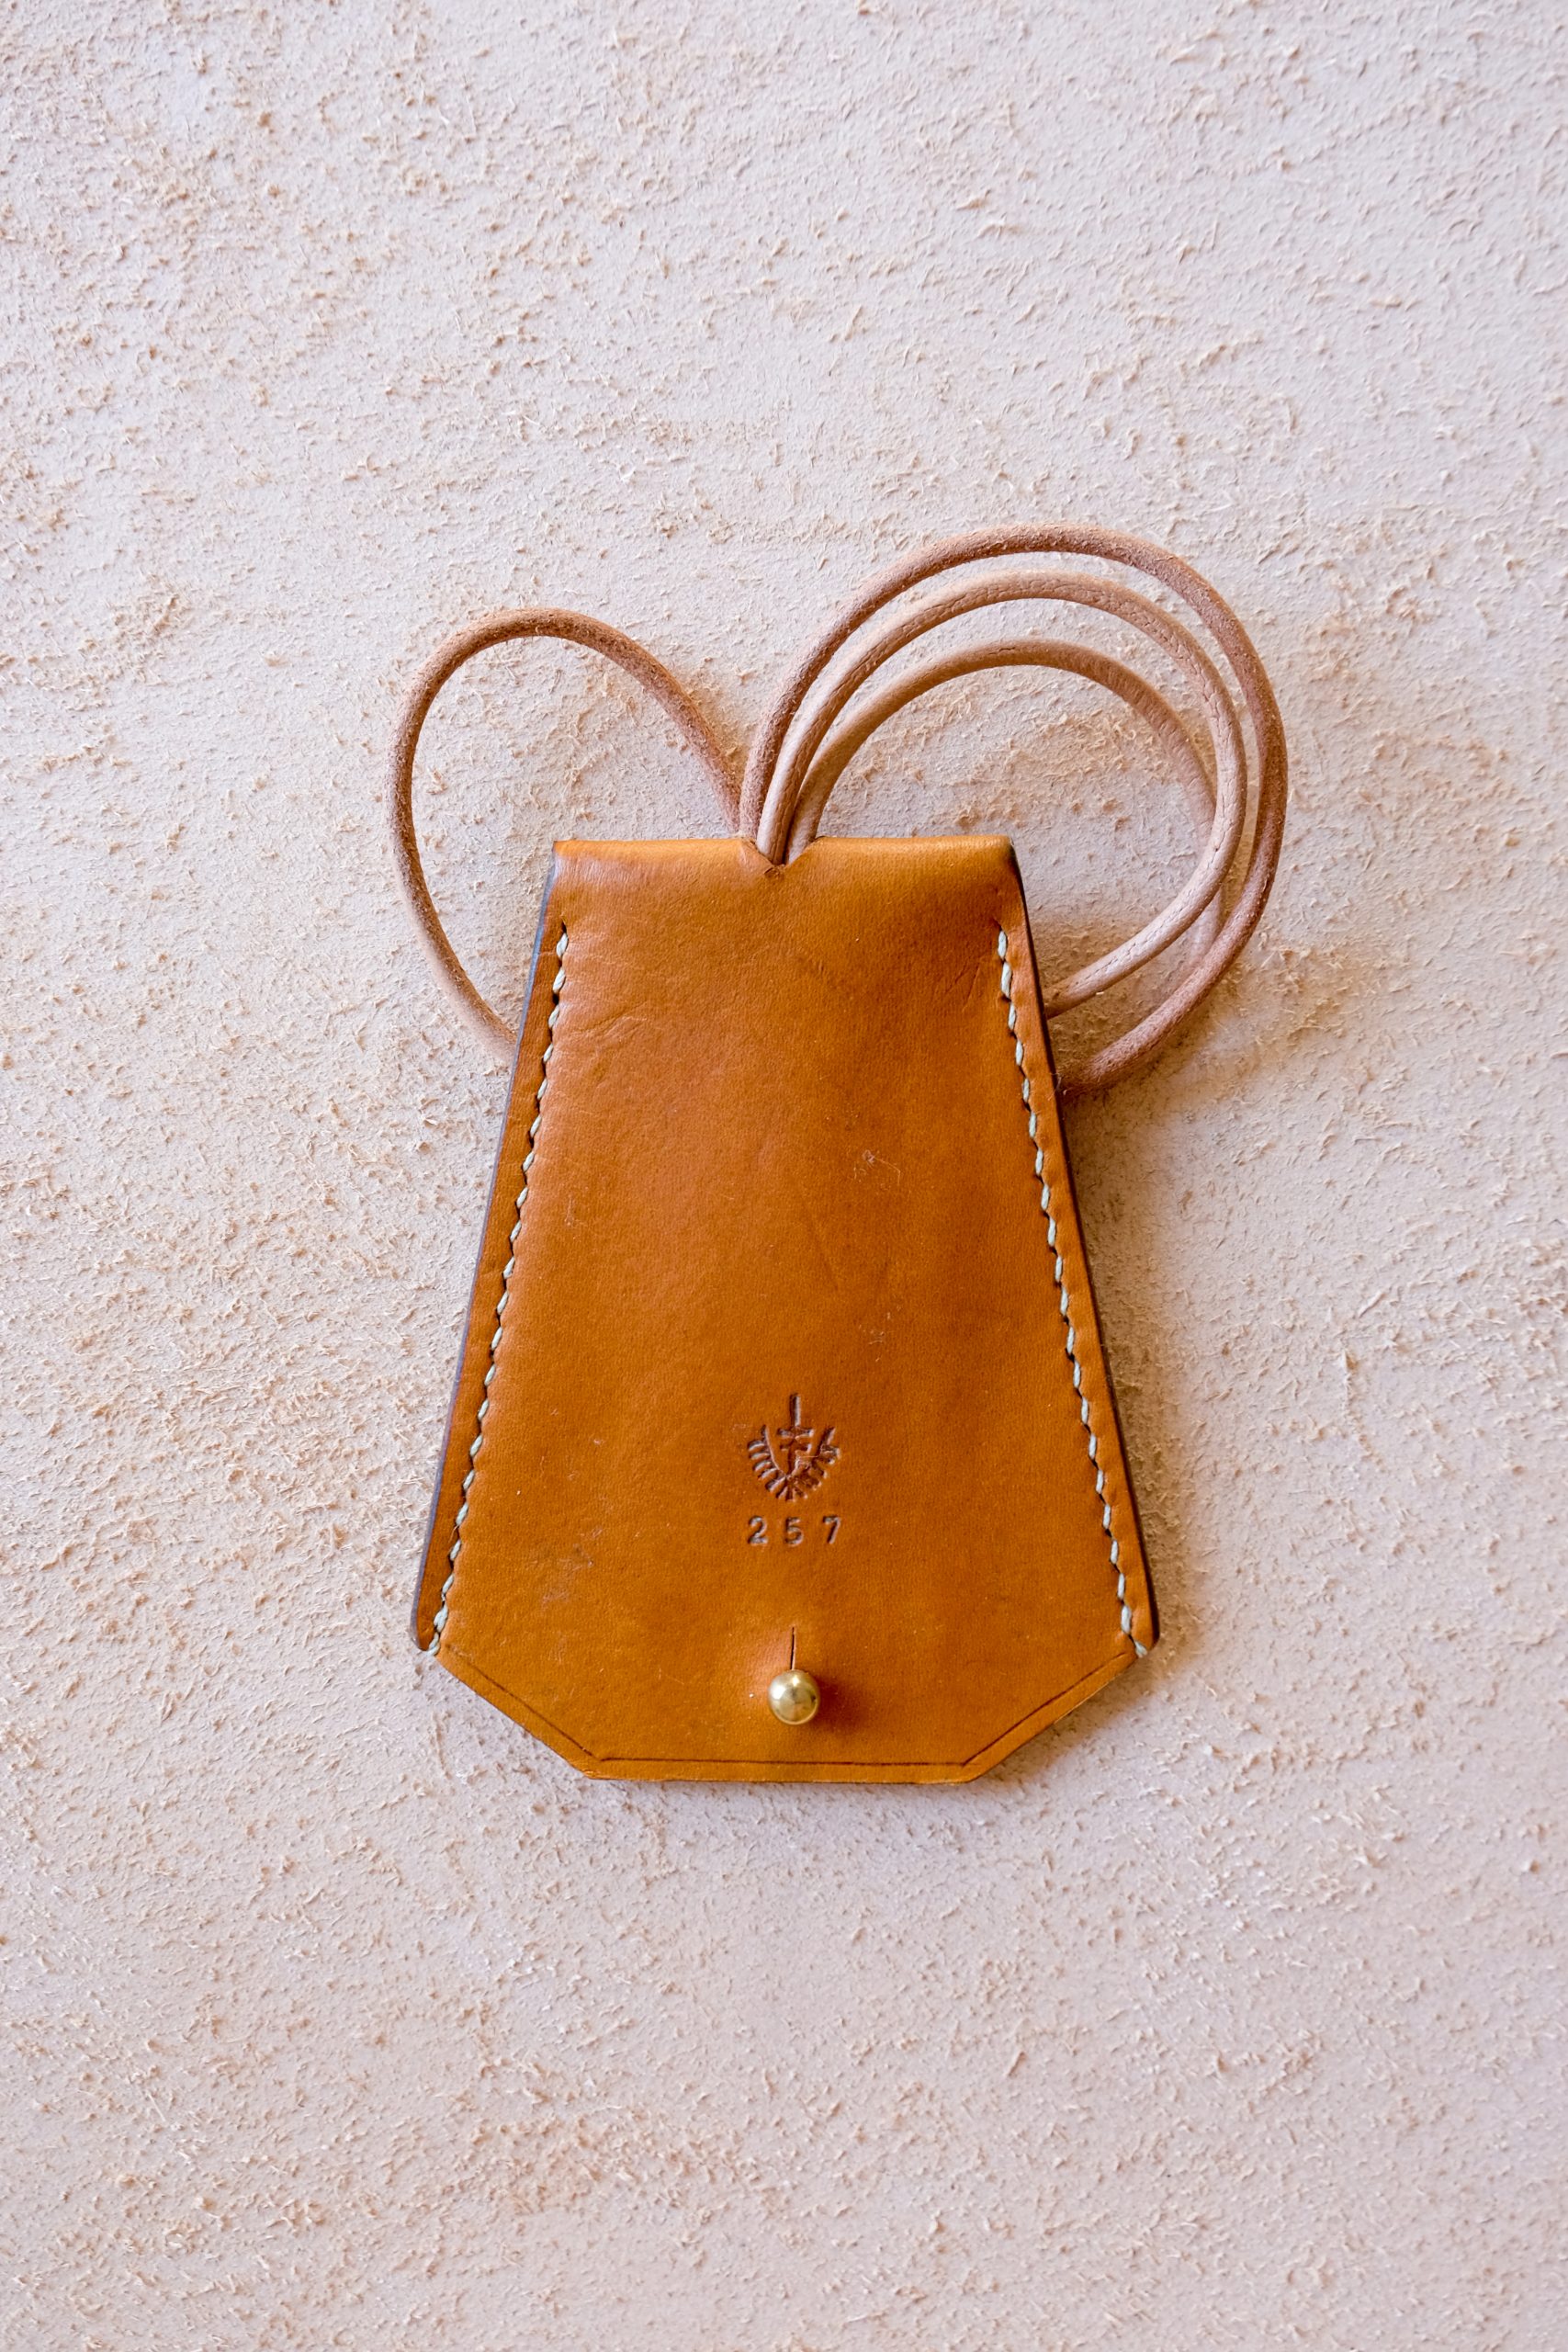 lerif designs leather bell keyholder in turmeric on beige background